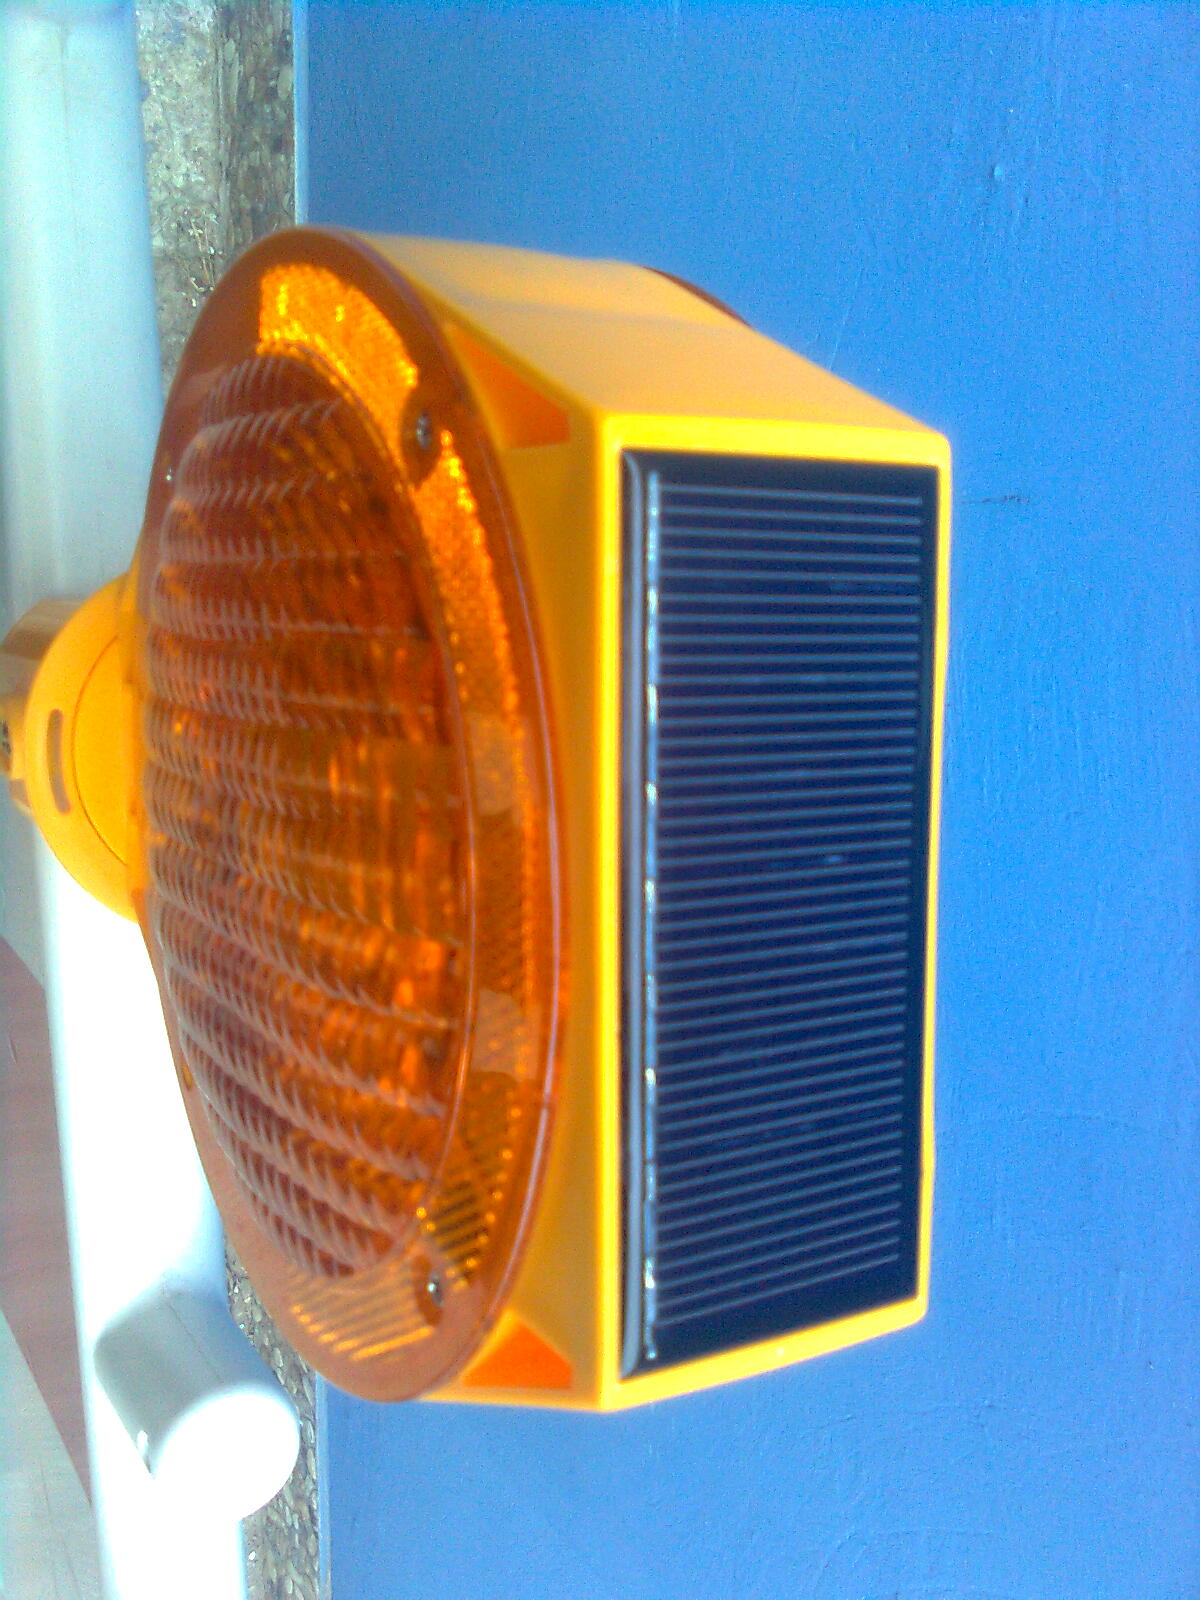 2.2 Lampa solara Tip C.jpg